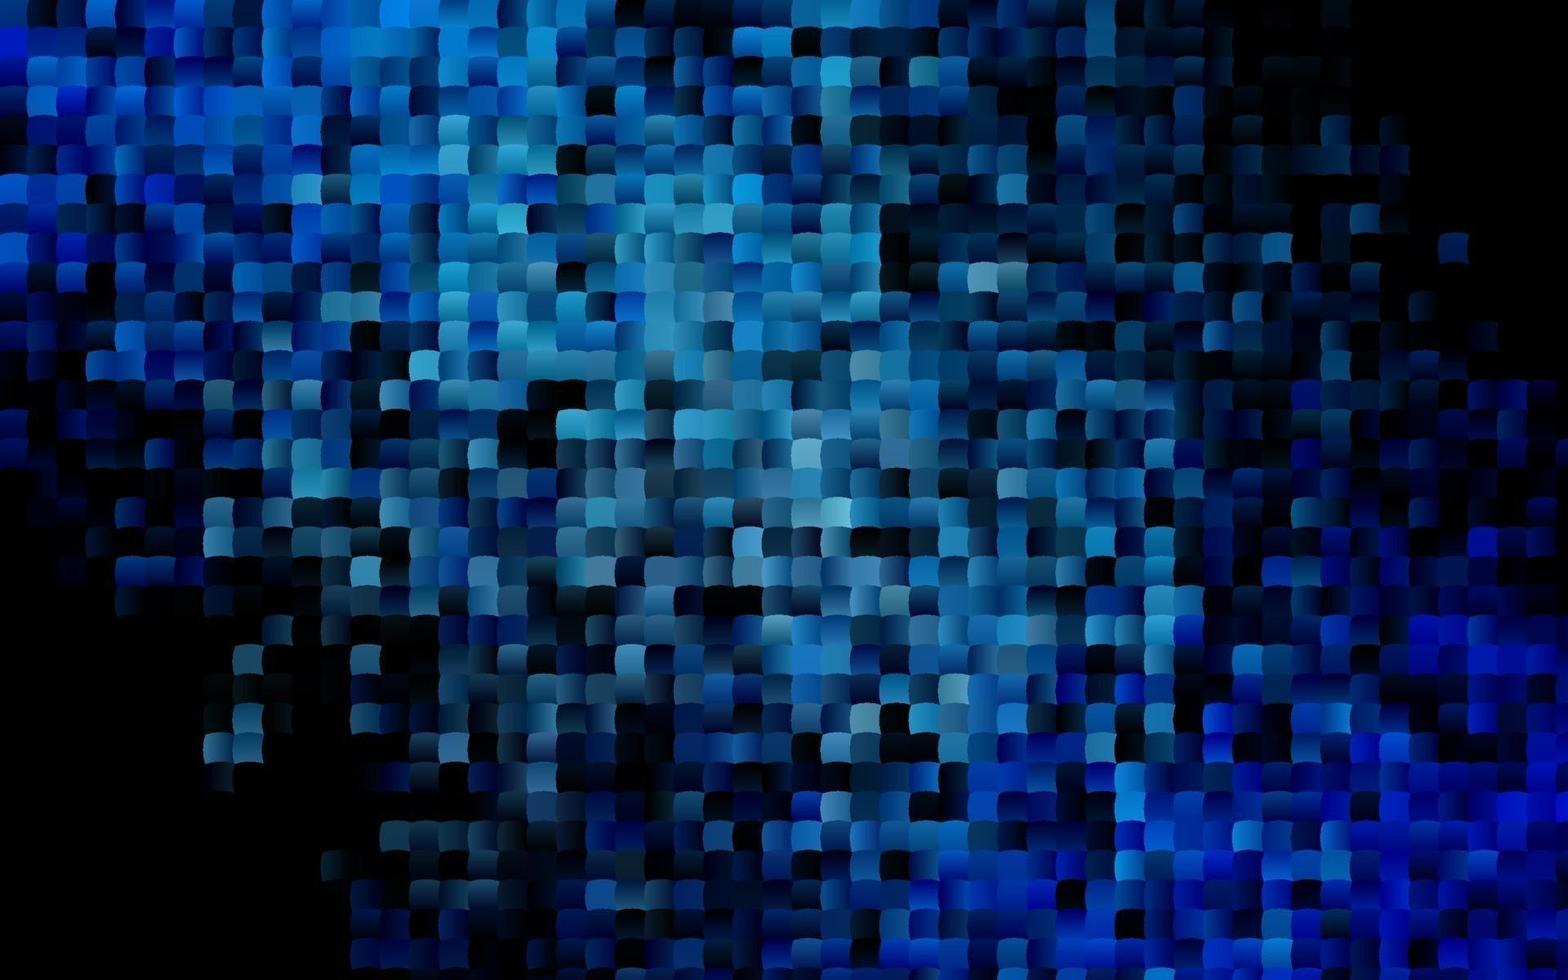 Dark BLUE vector cover in polygonal style.